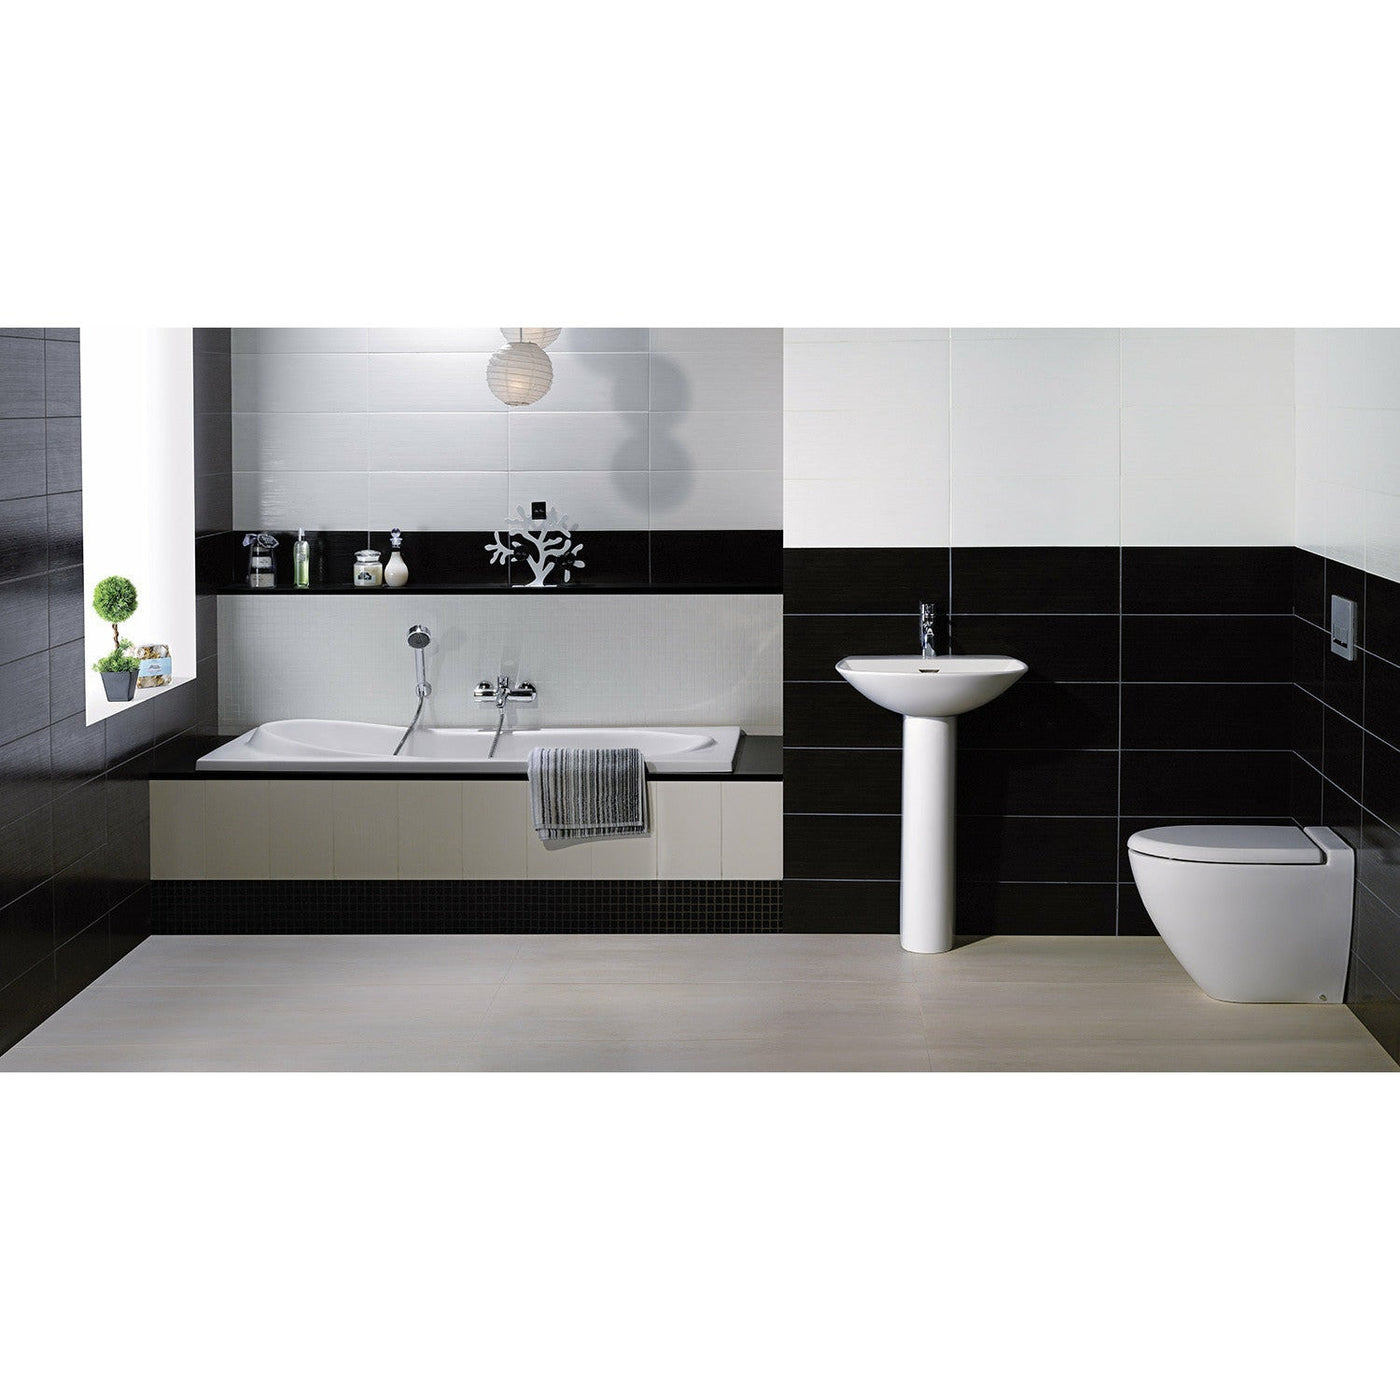 Frontline Reserva Back-to-Wall Toilet-Standard Seat - Letta London - 